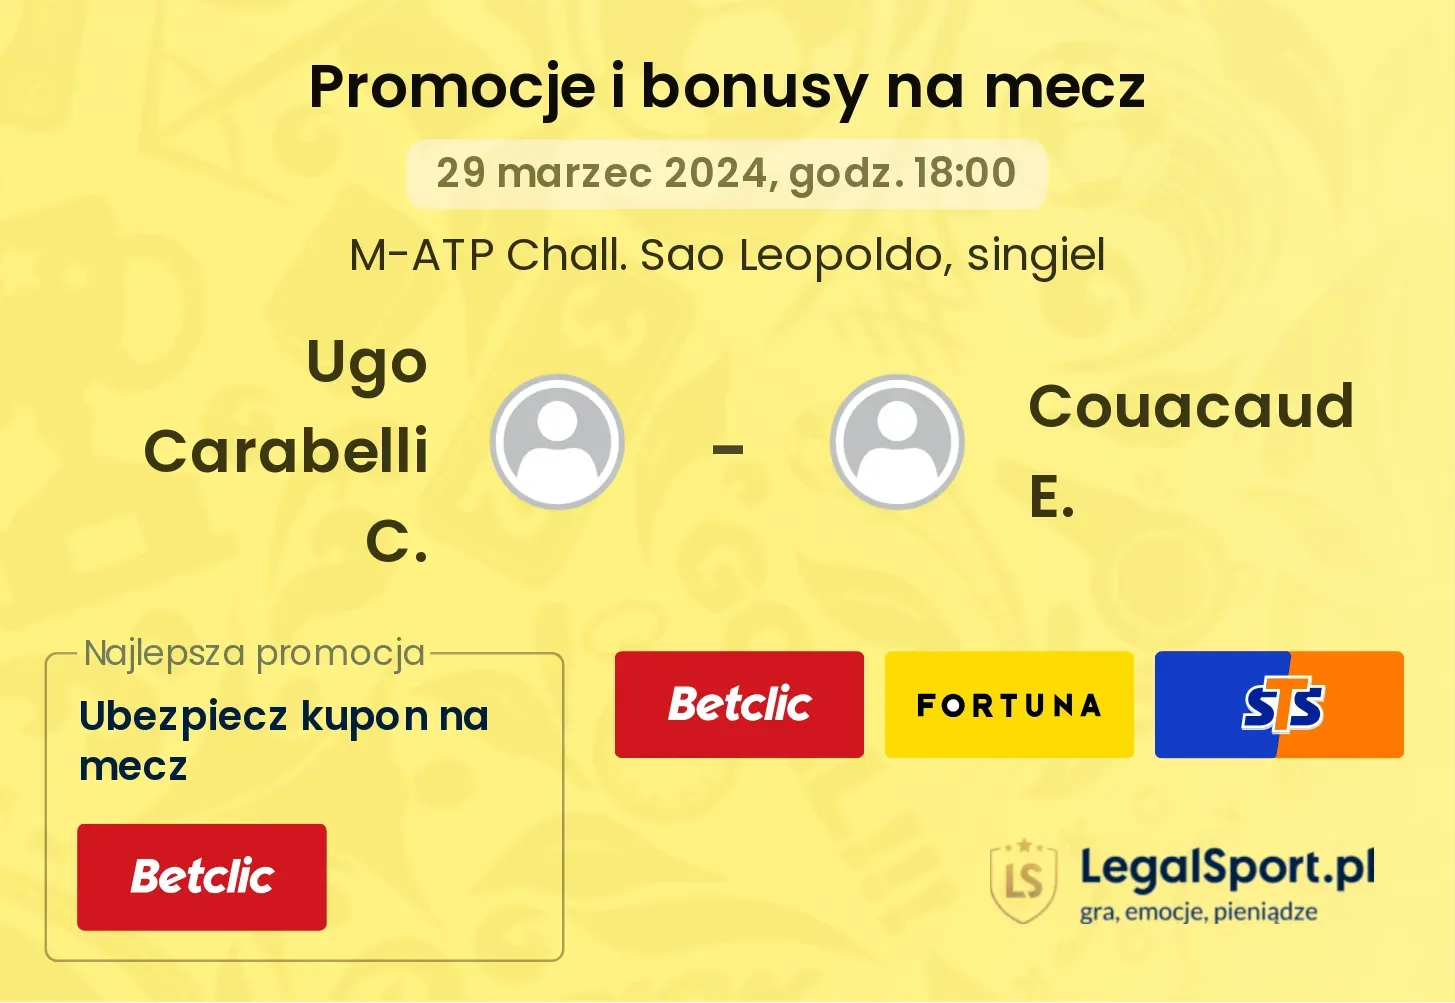 Ugo Carabelli C. - Couacaud E. promocje bonusy na mecz